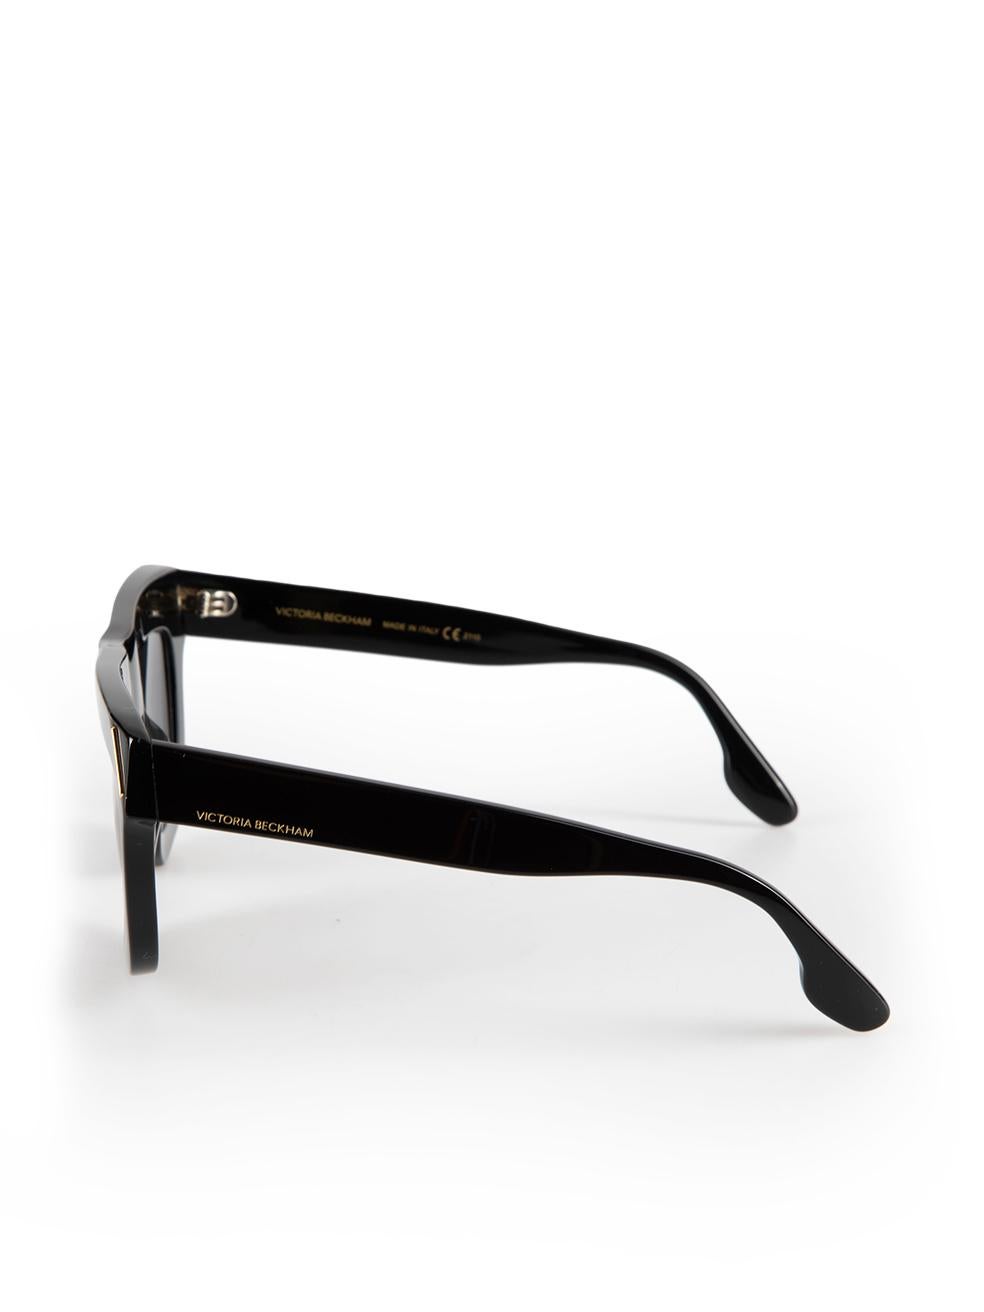 Victoria Beckham Black Browline Tinted Sunglasses For Sale 1